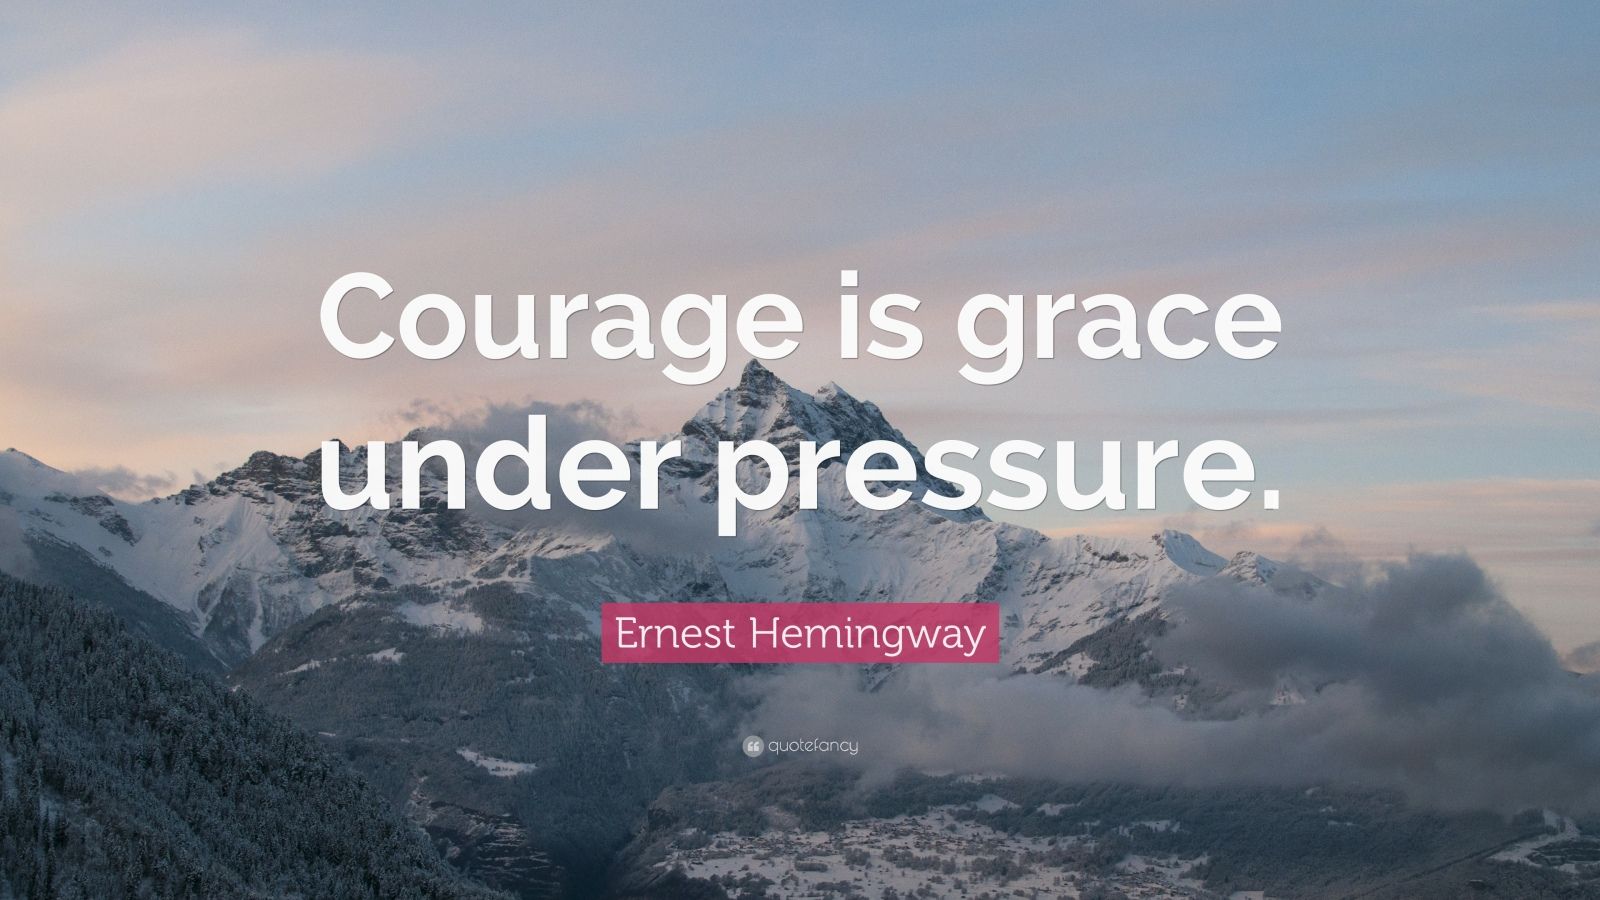 Ernest Hemingway Quote: "Courage is grace under pressure." (19 wallpapers) - Quotefancy